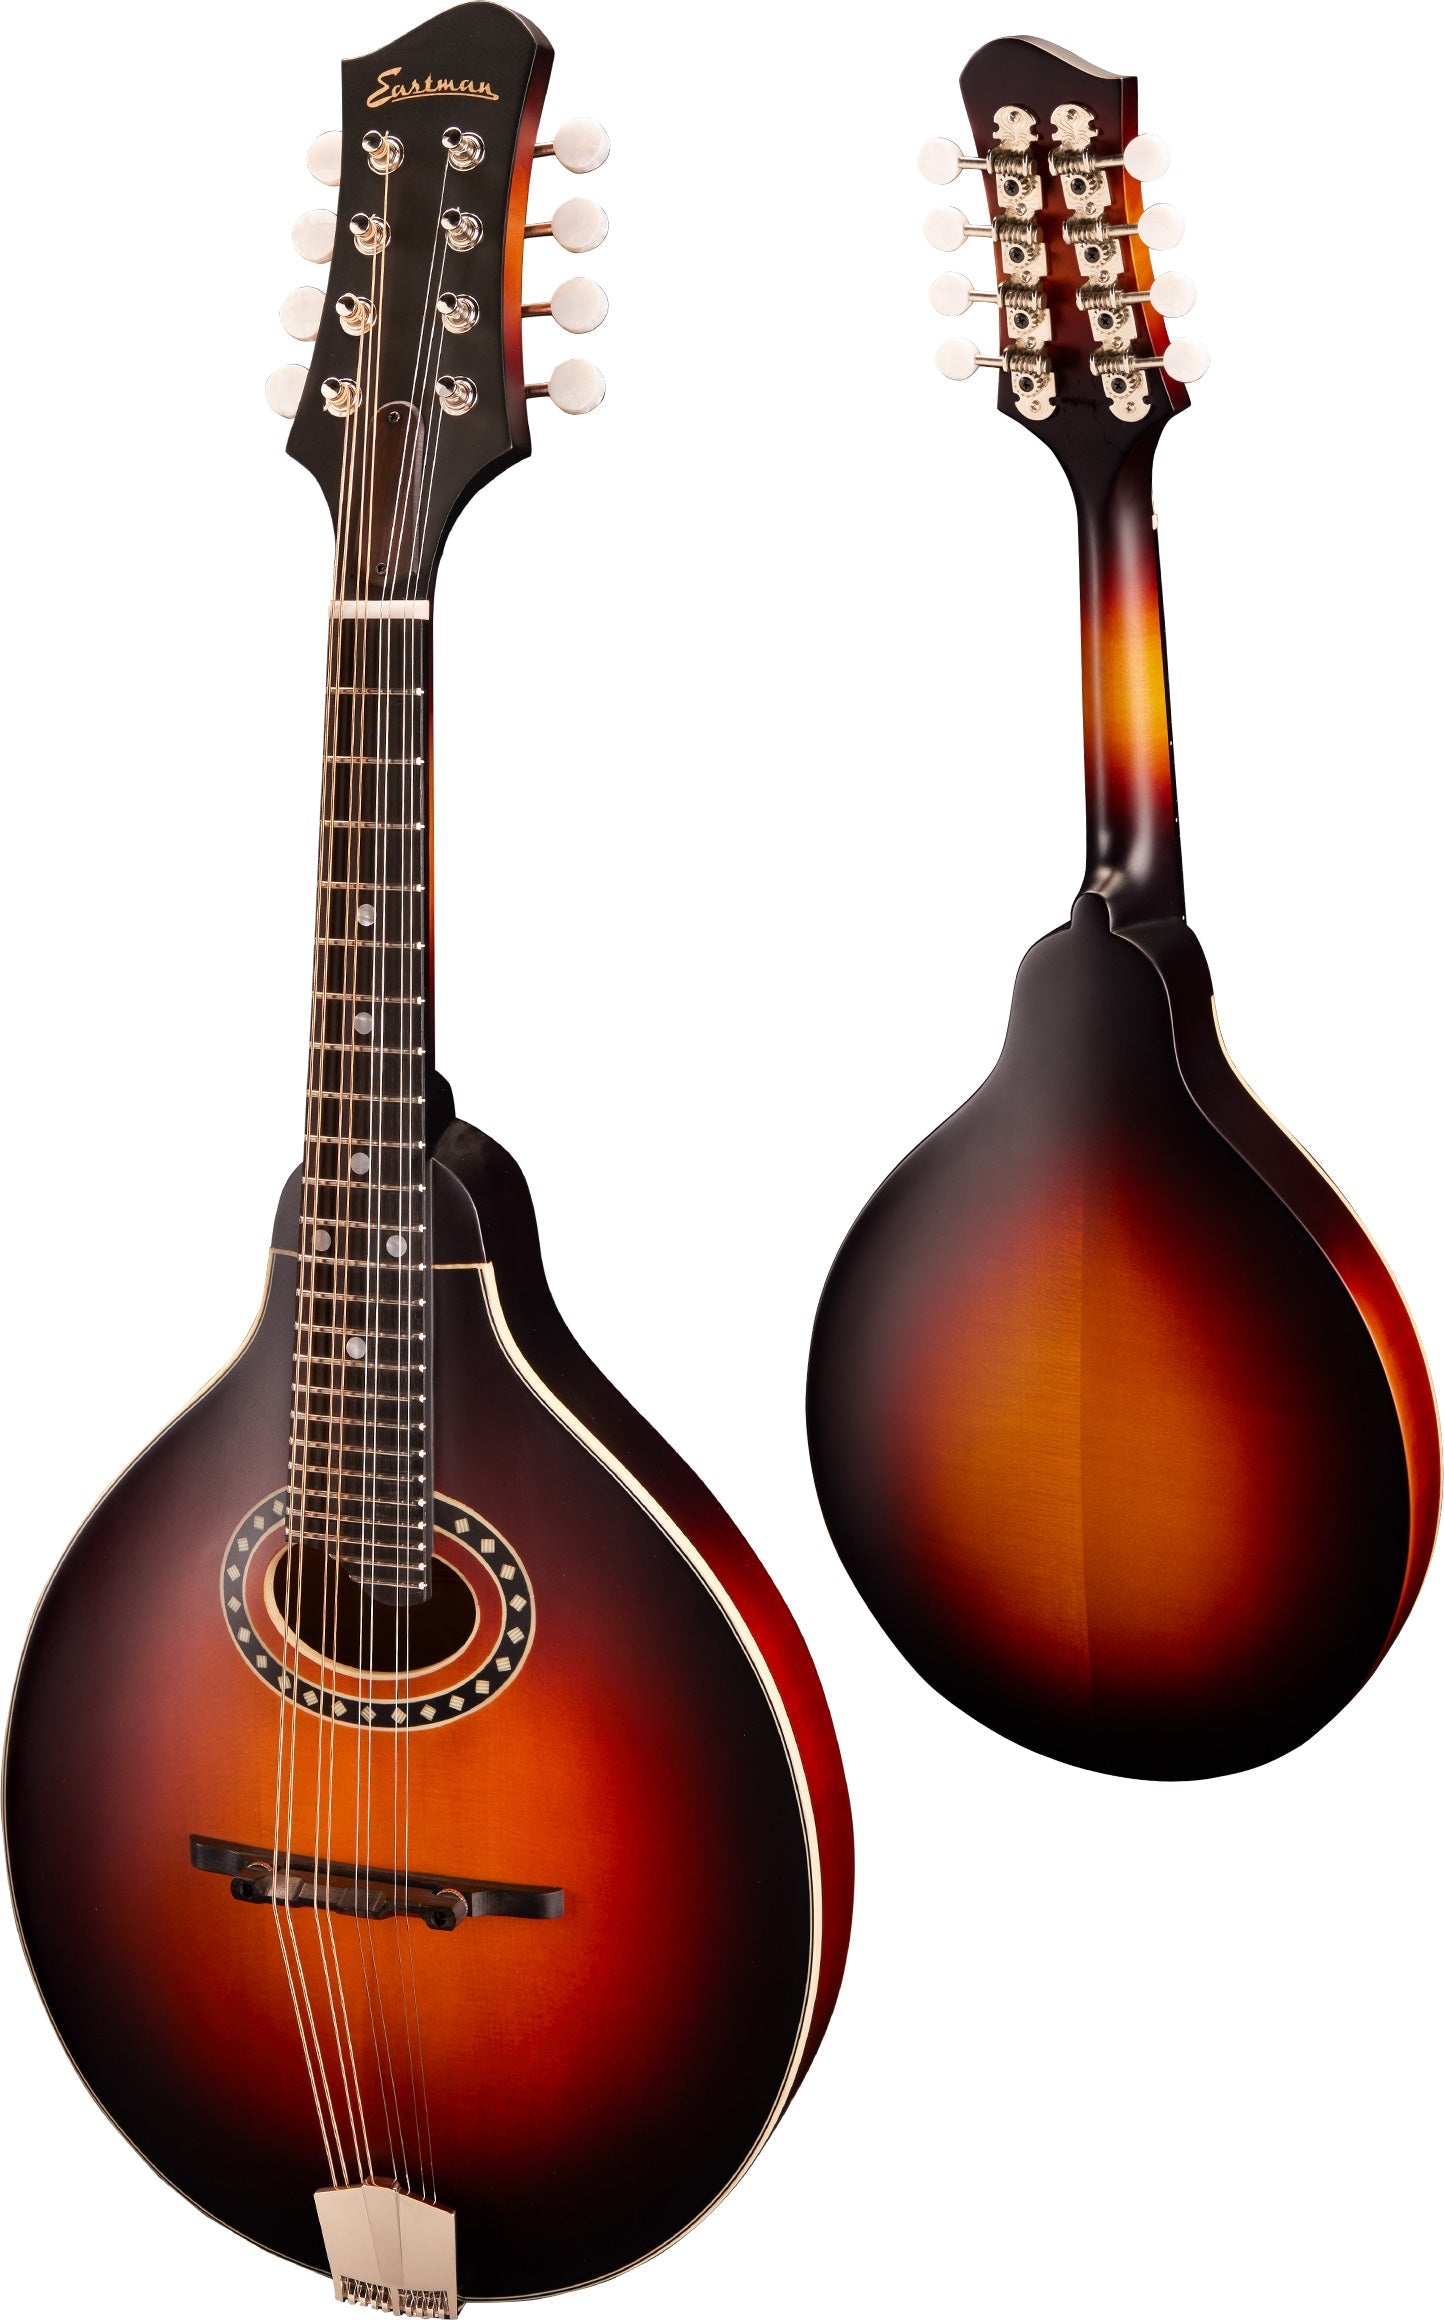 Eastman MD304E-SB A-style Oval Soundhole Mandolin, Mandolin for sale at Richards Guitars.